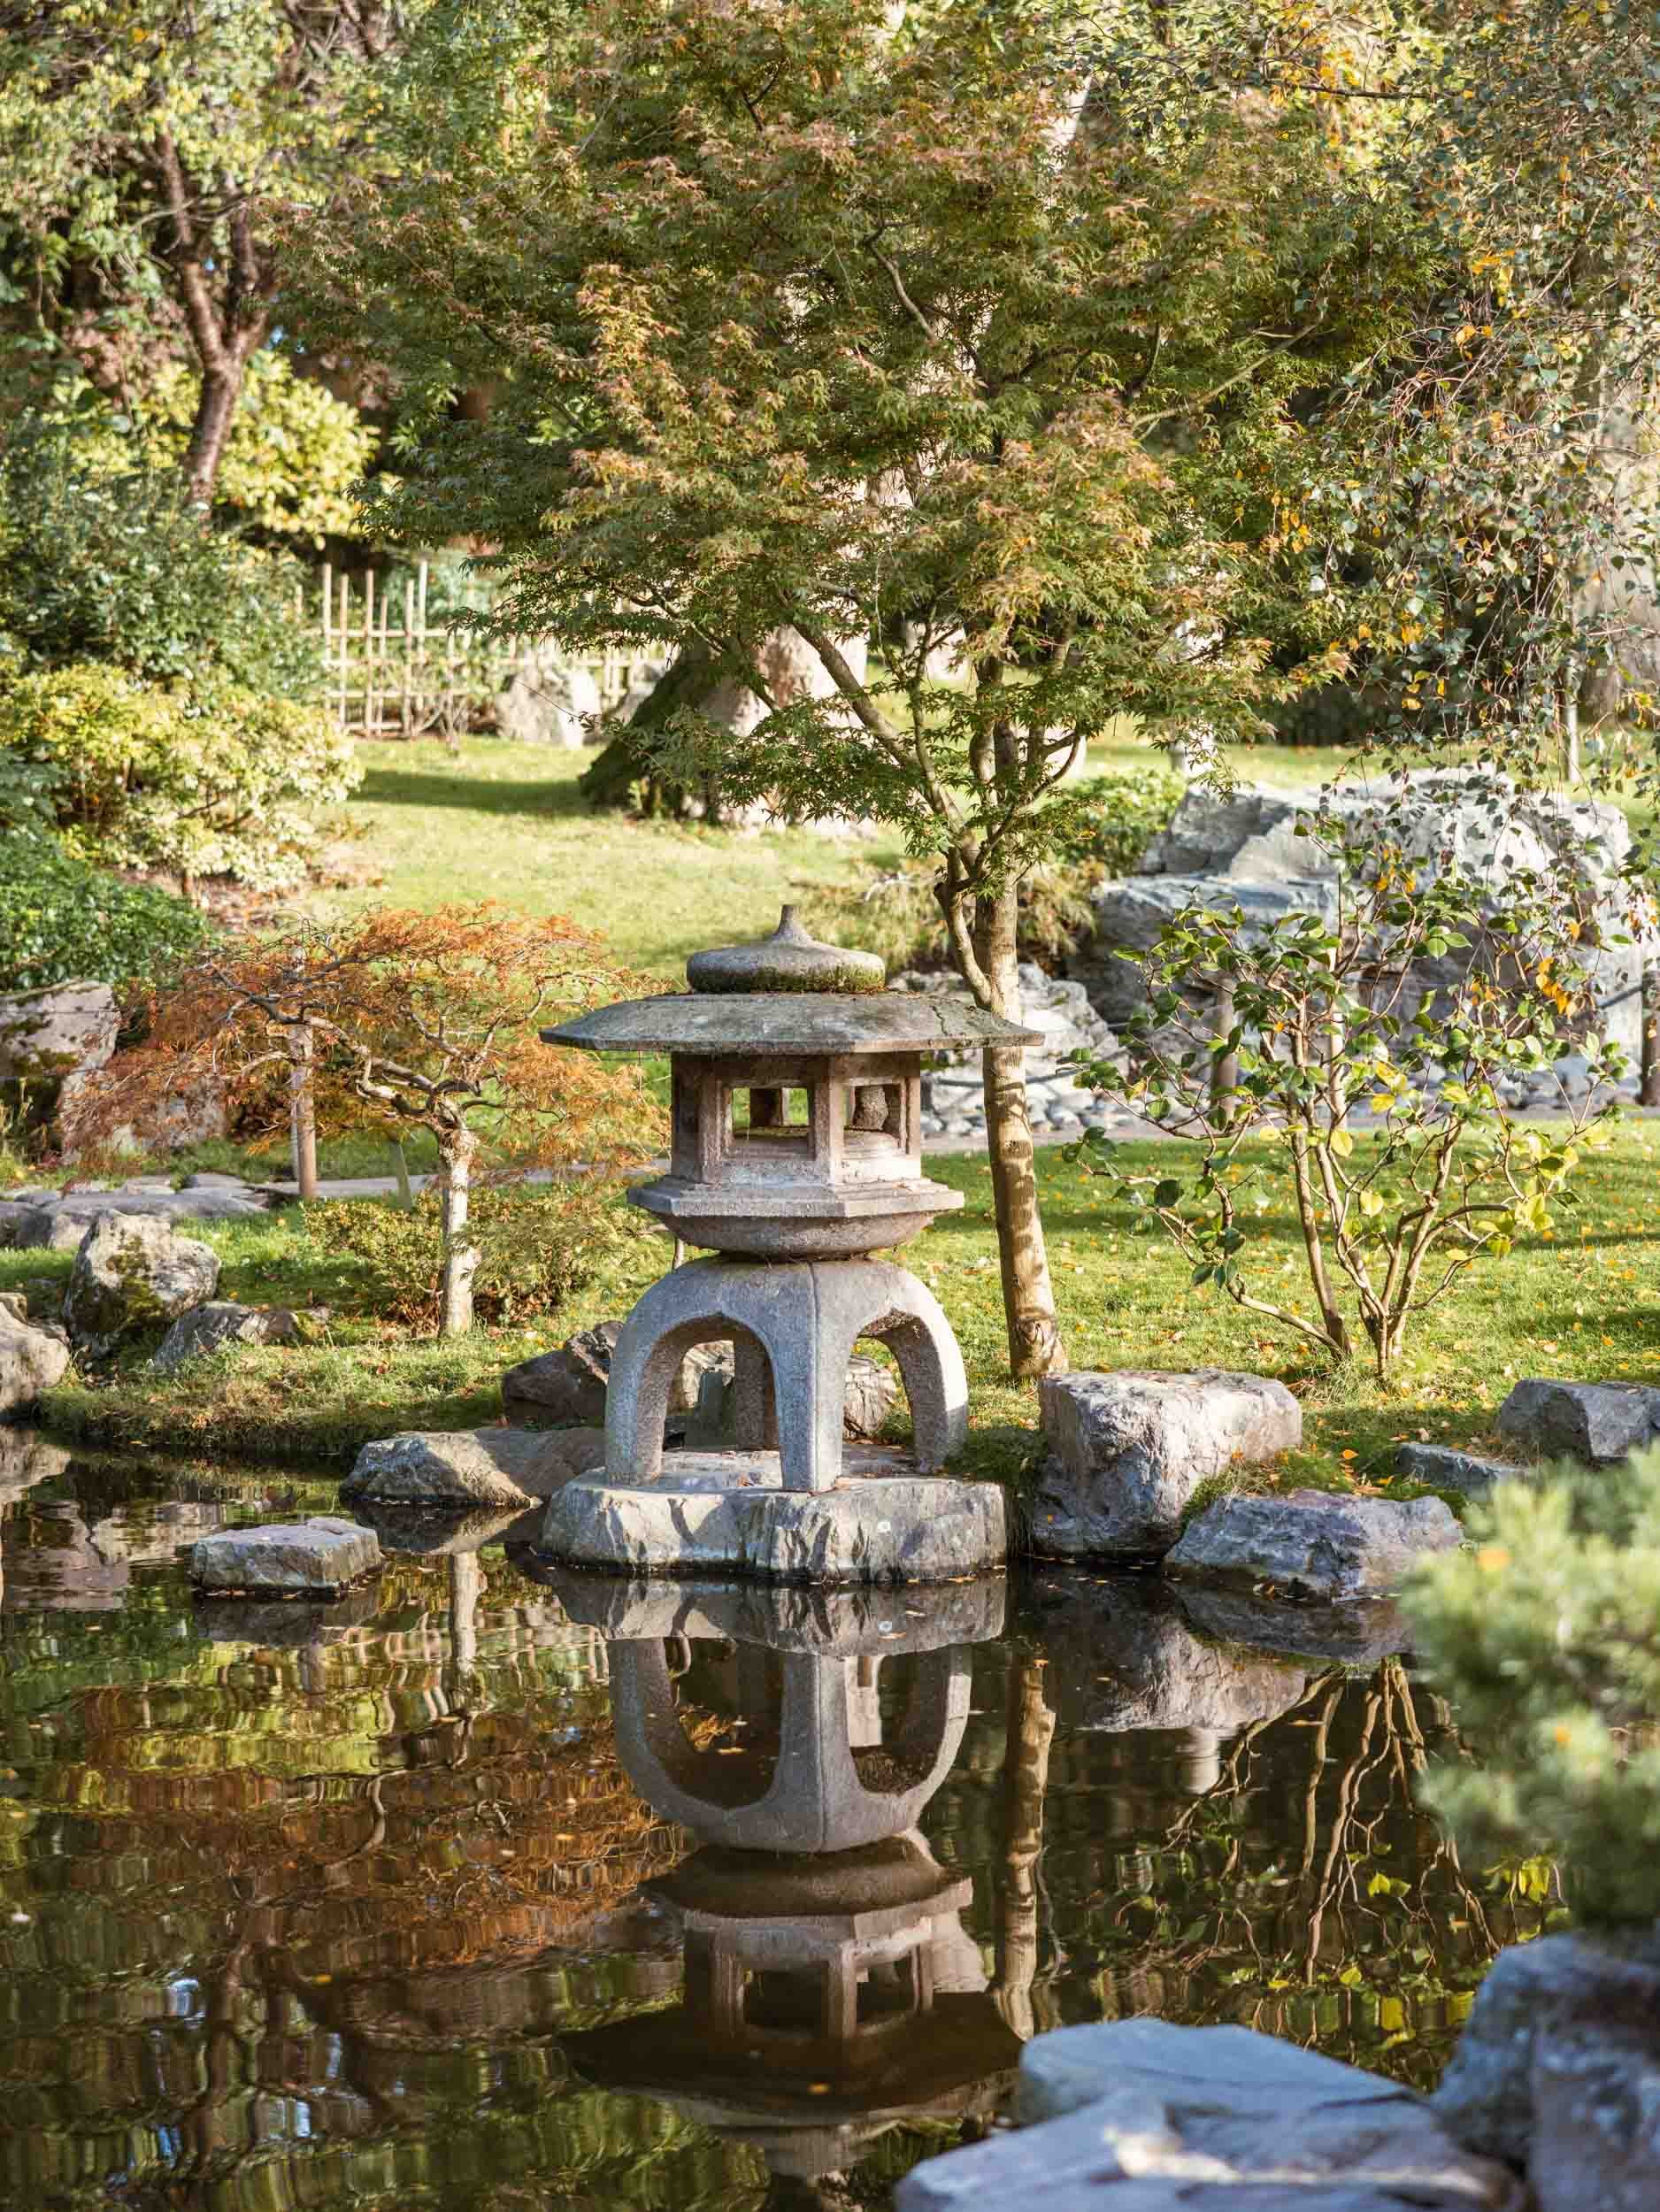 Kyoto Garden in Holland Park: A Japanese Garden in London